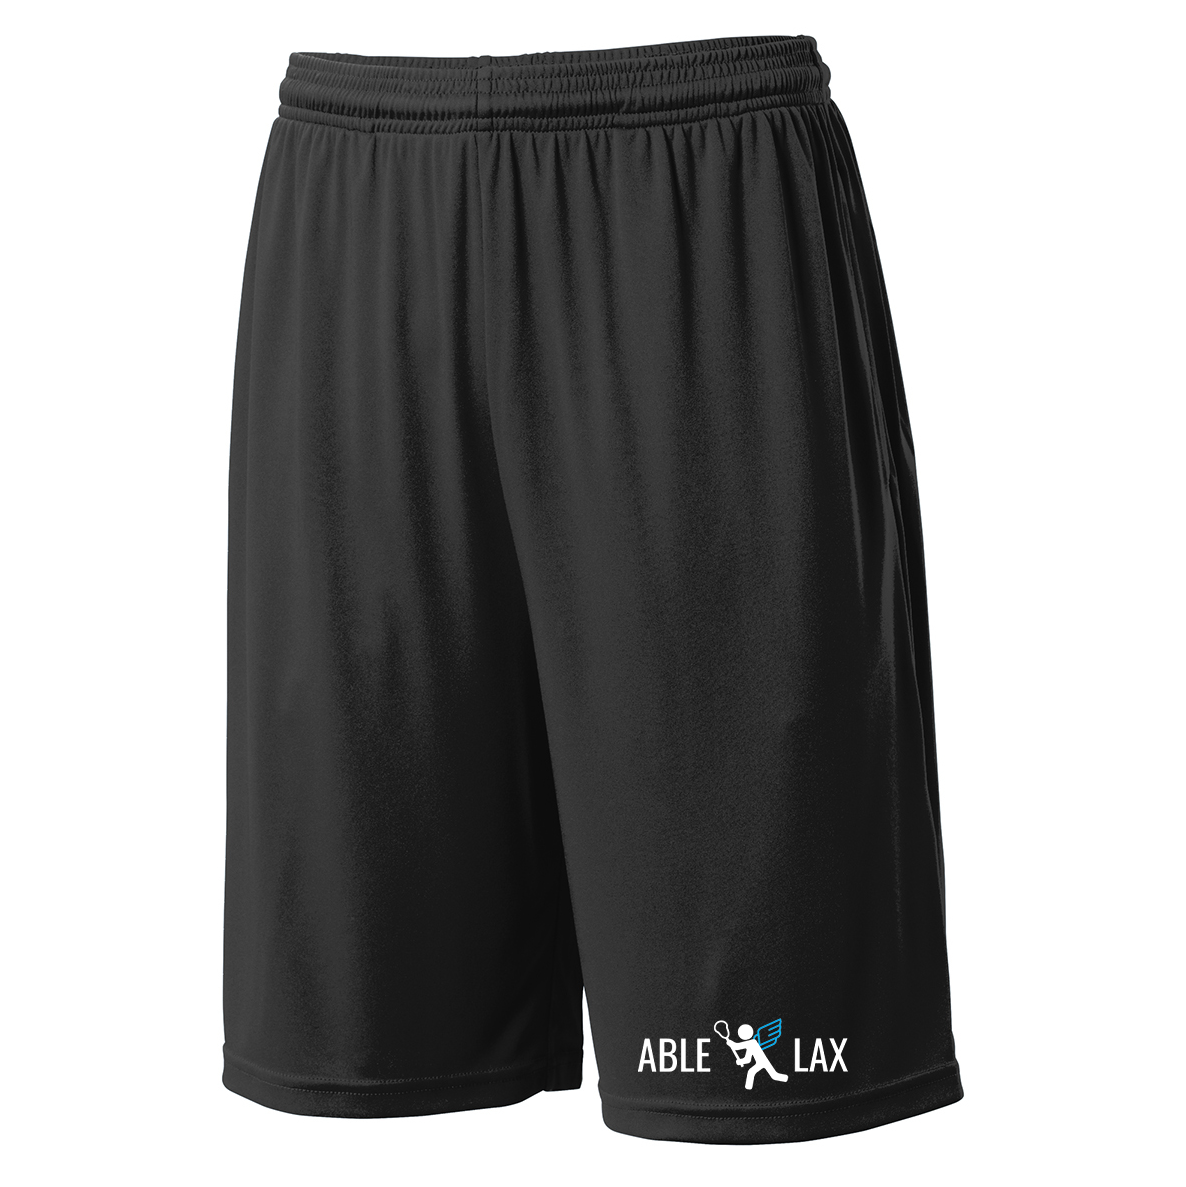 ABLE Lacrosse Shorts